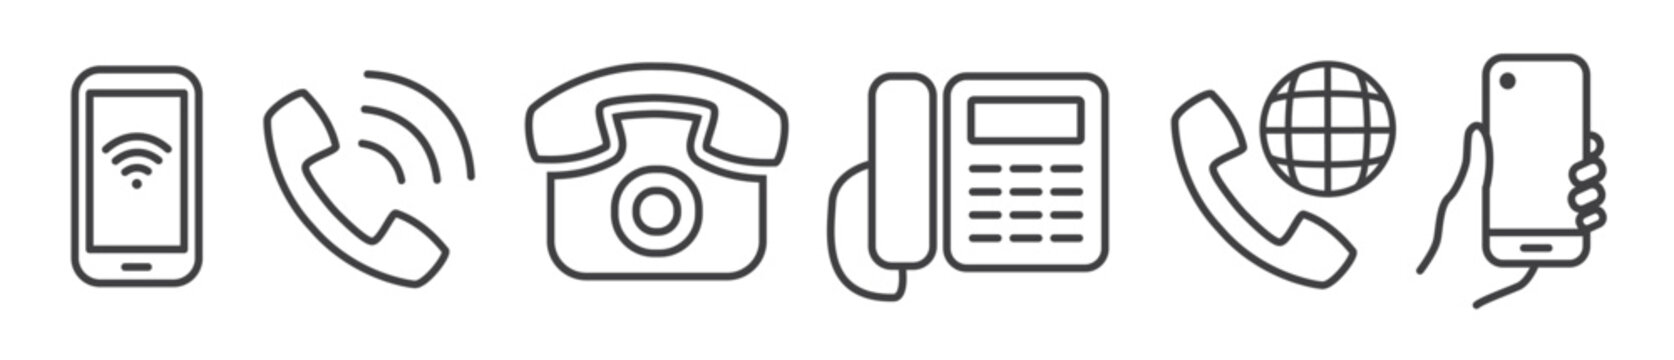 Phone icon set - thin line vector illustration